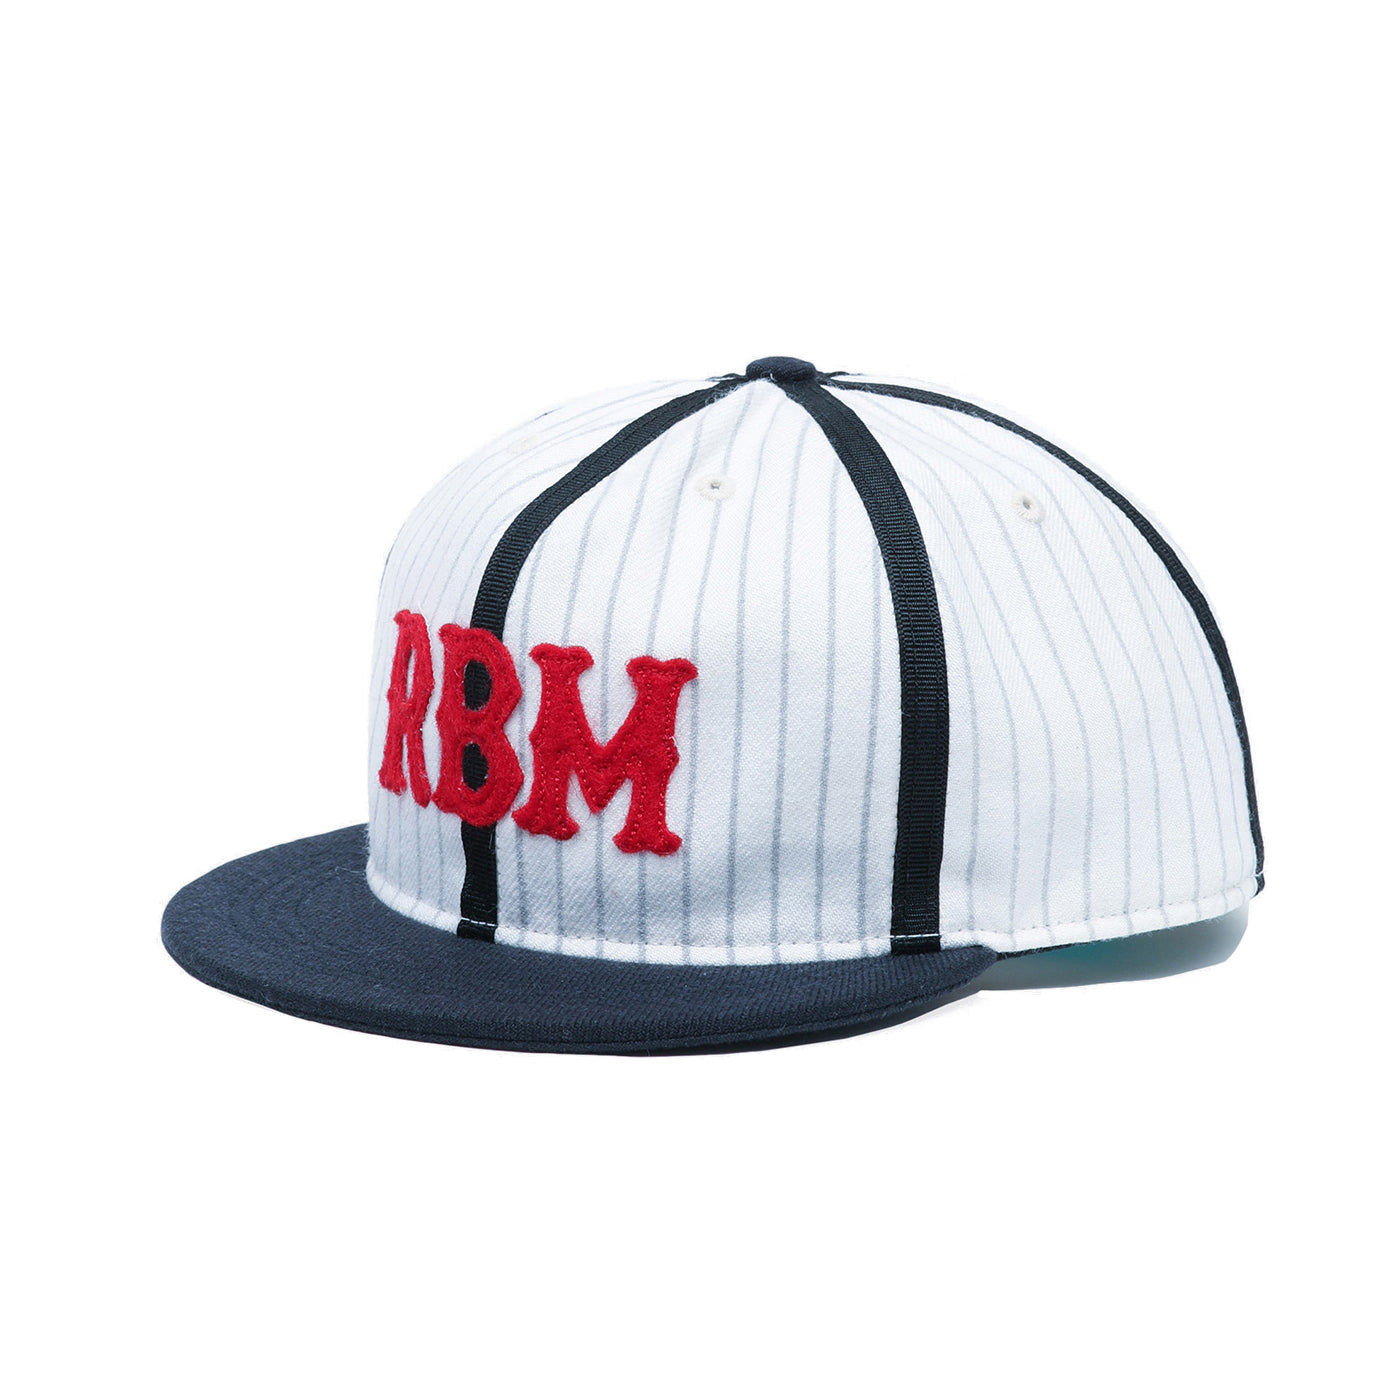 RBM Wrigley Hat